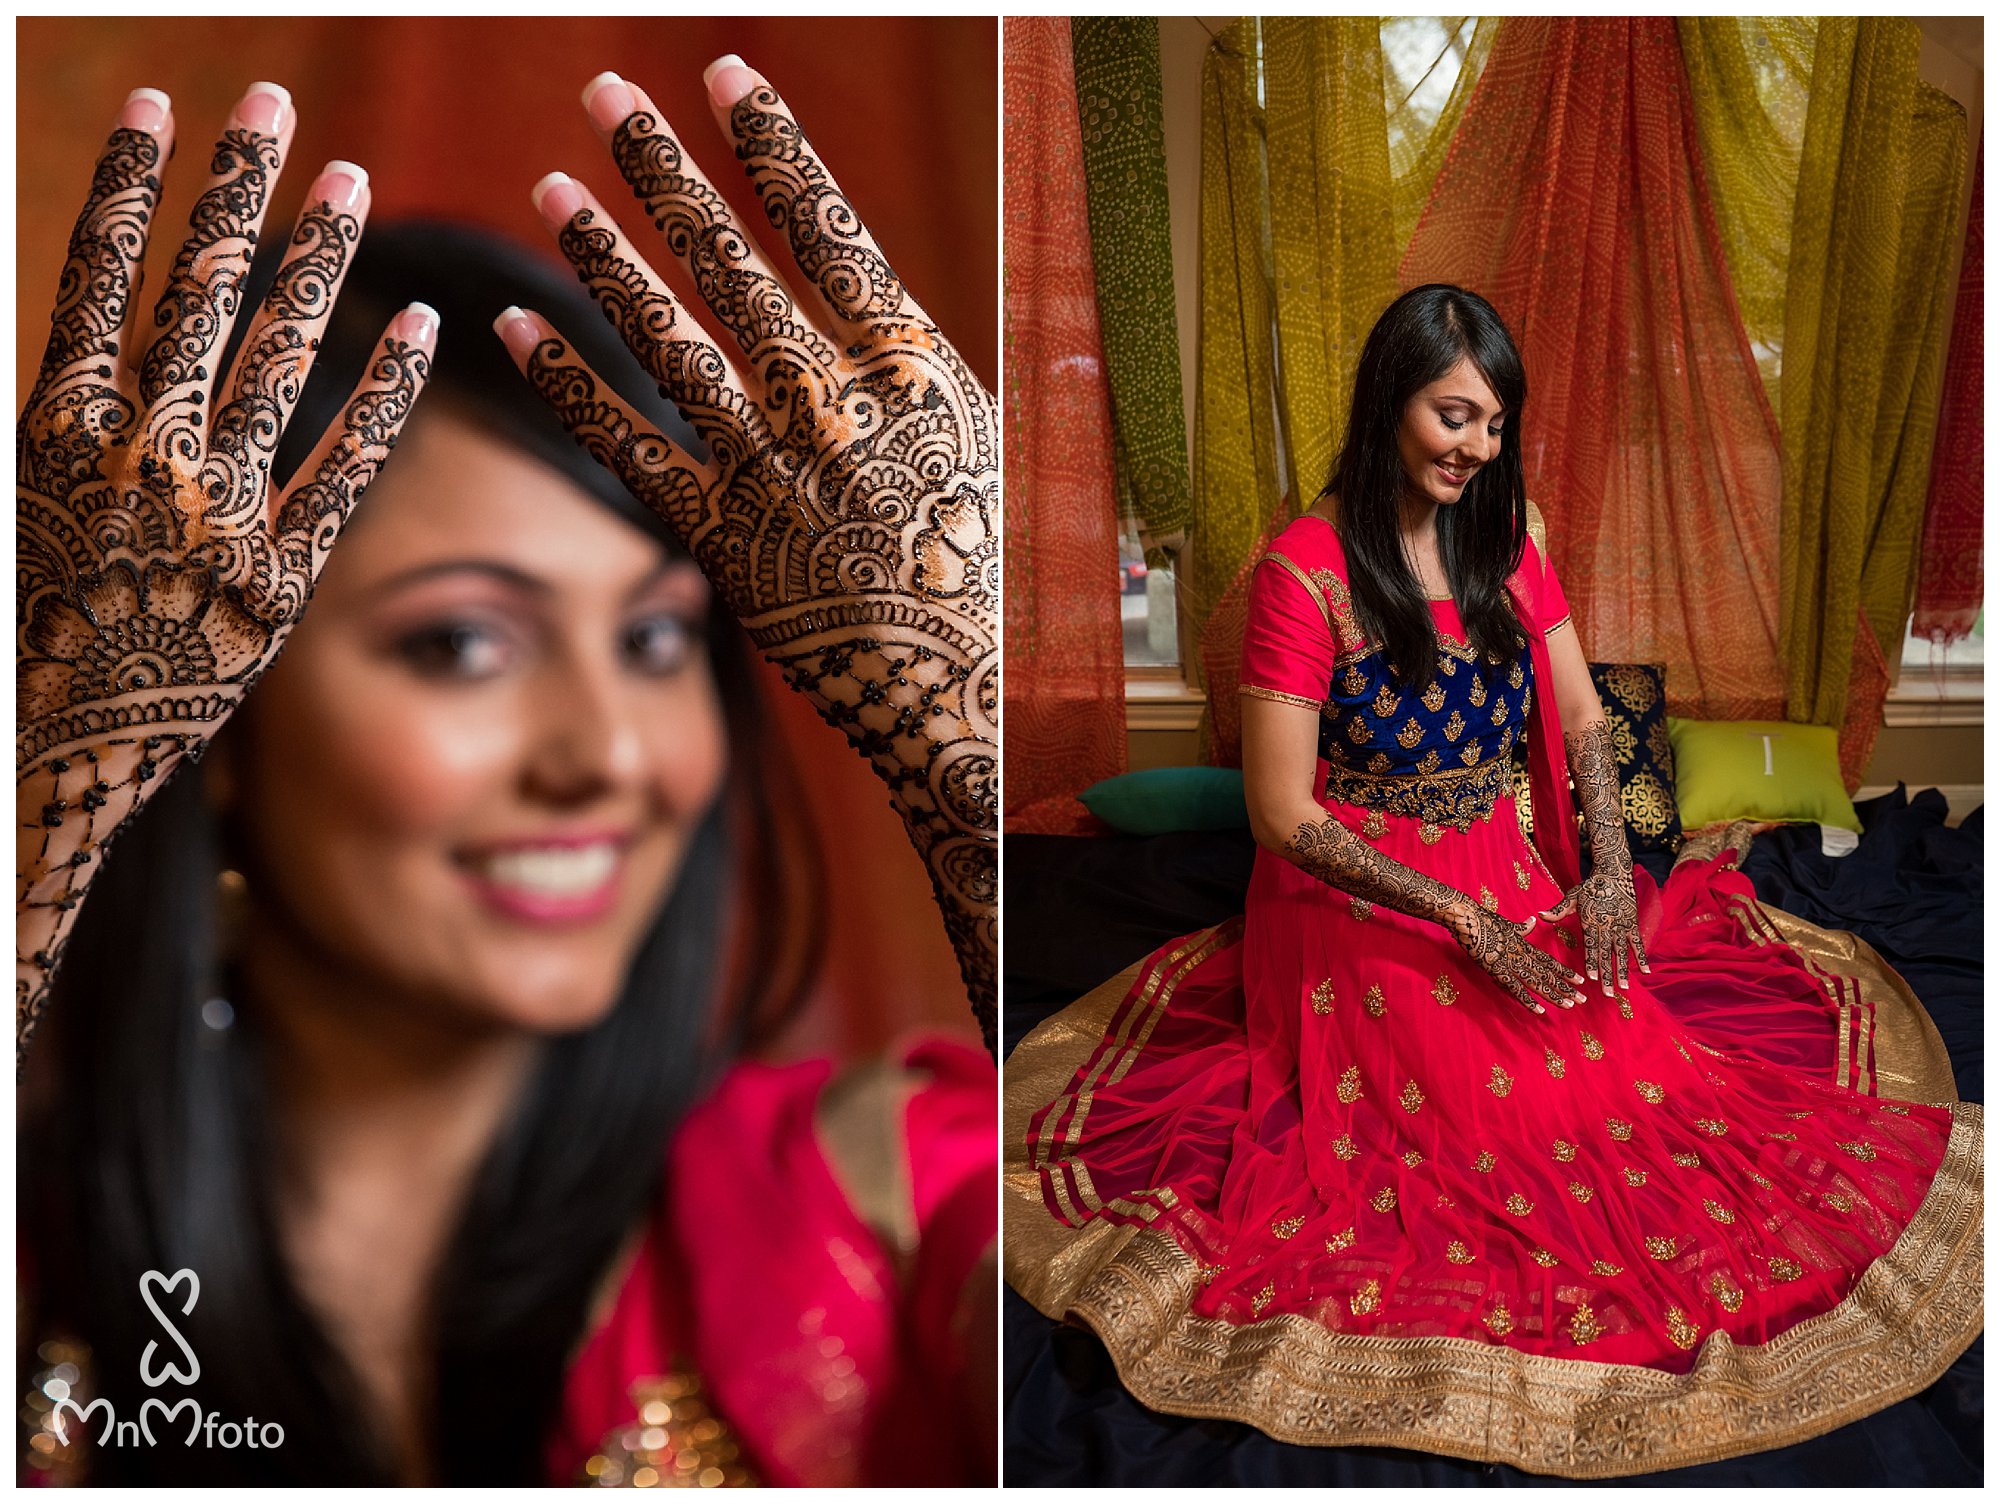 Supinder and Harman, Modesto, USA | Indian wedding poses, Indian wedding  couple photography, Wedding couple poses photography